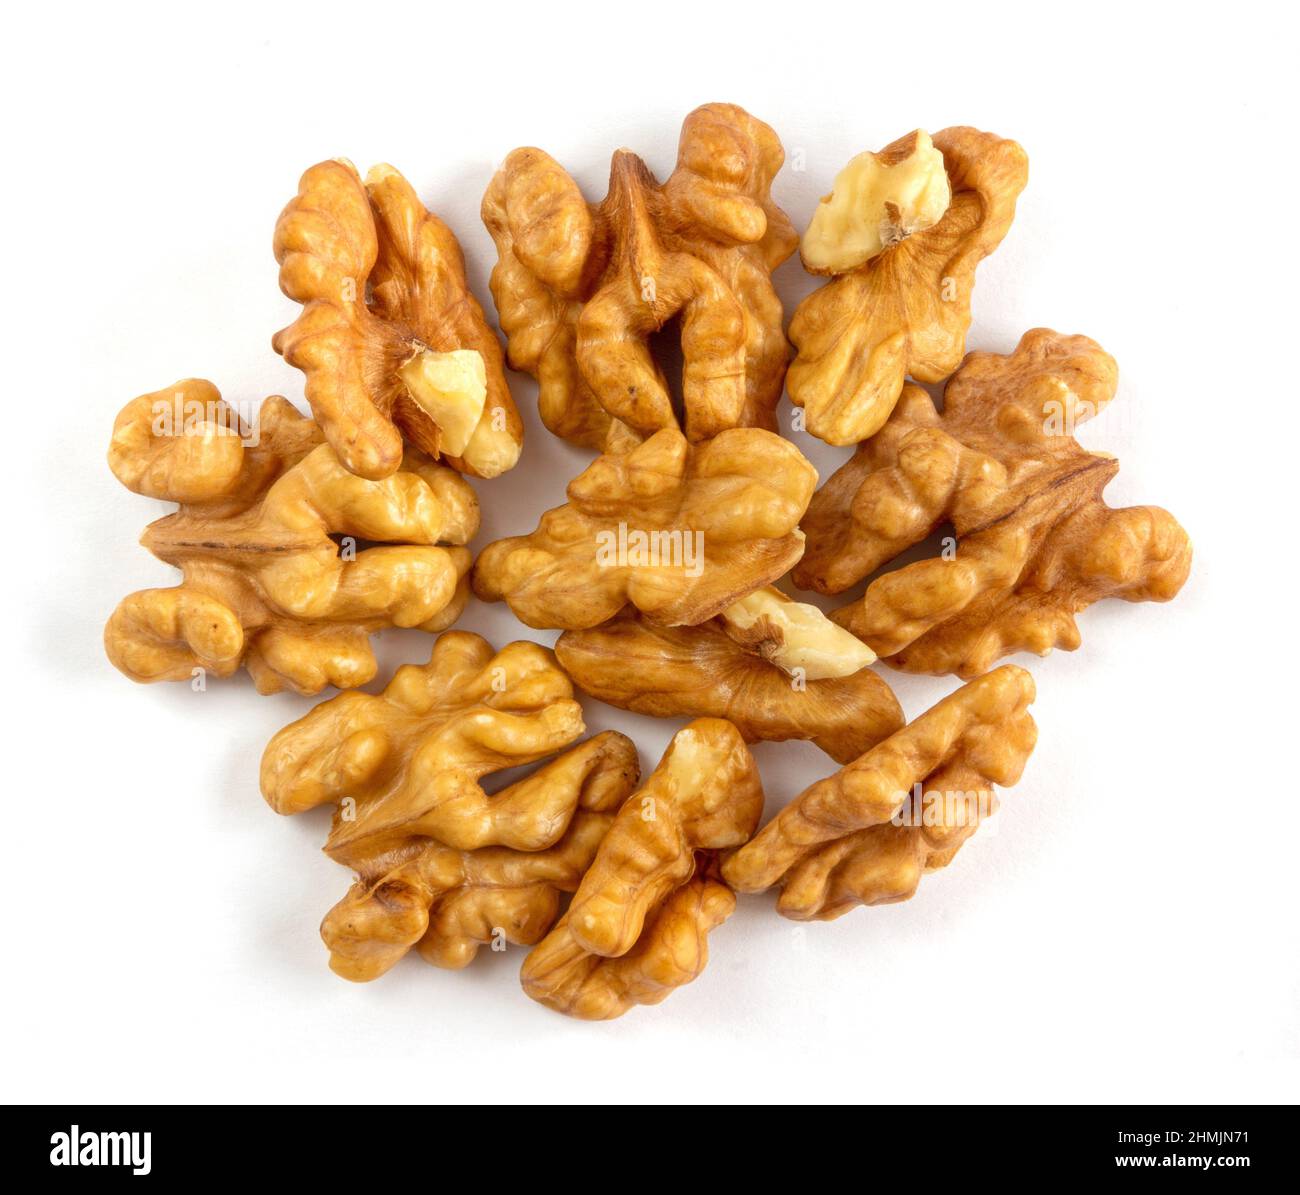 Cracked walnuts cores on white background Stock Photo